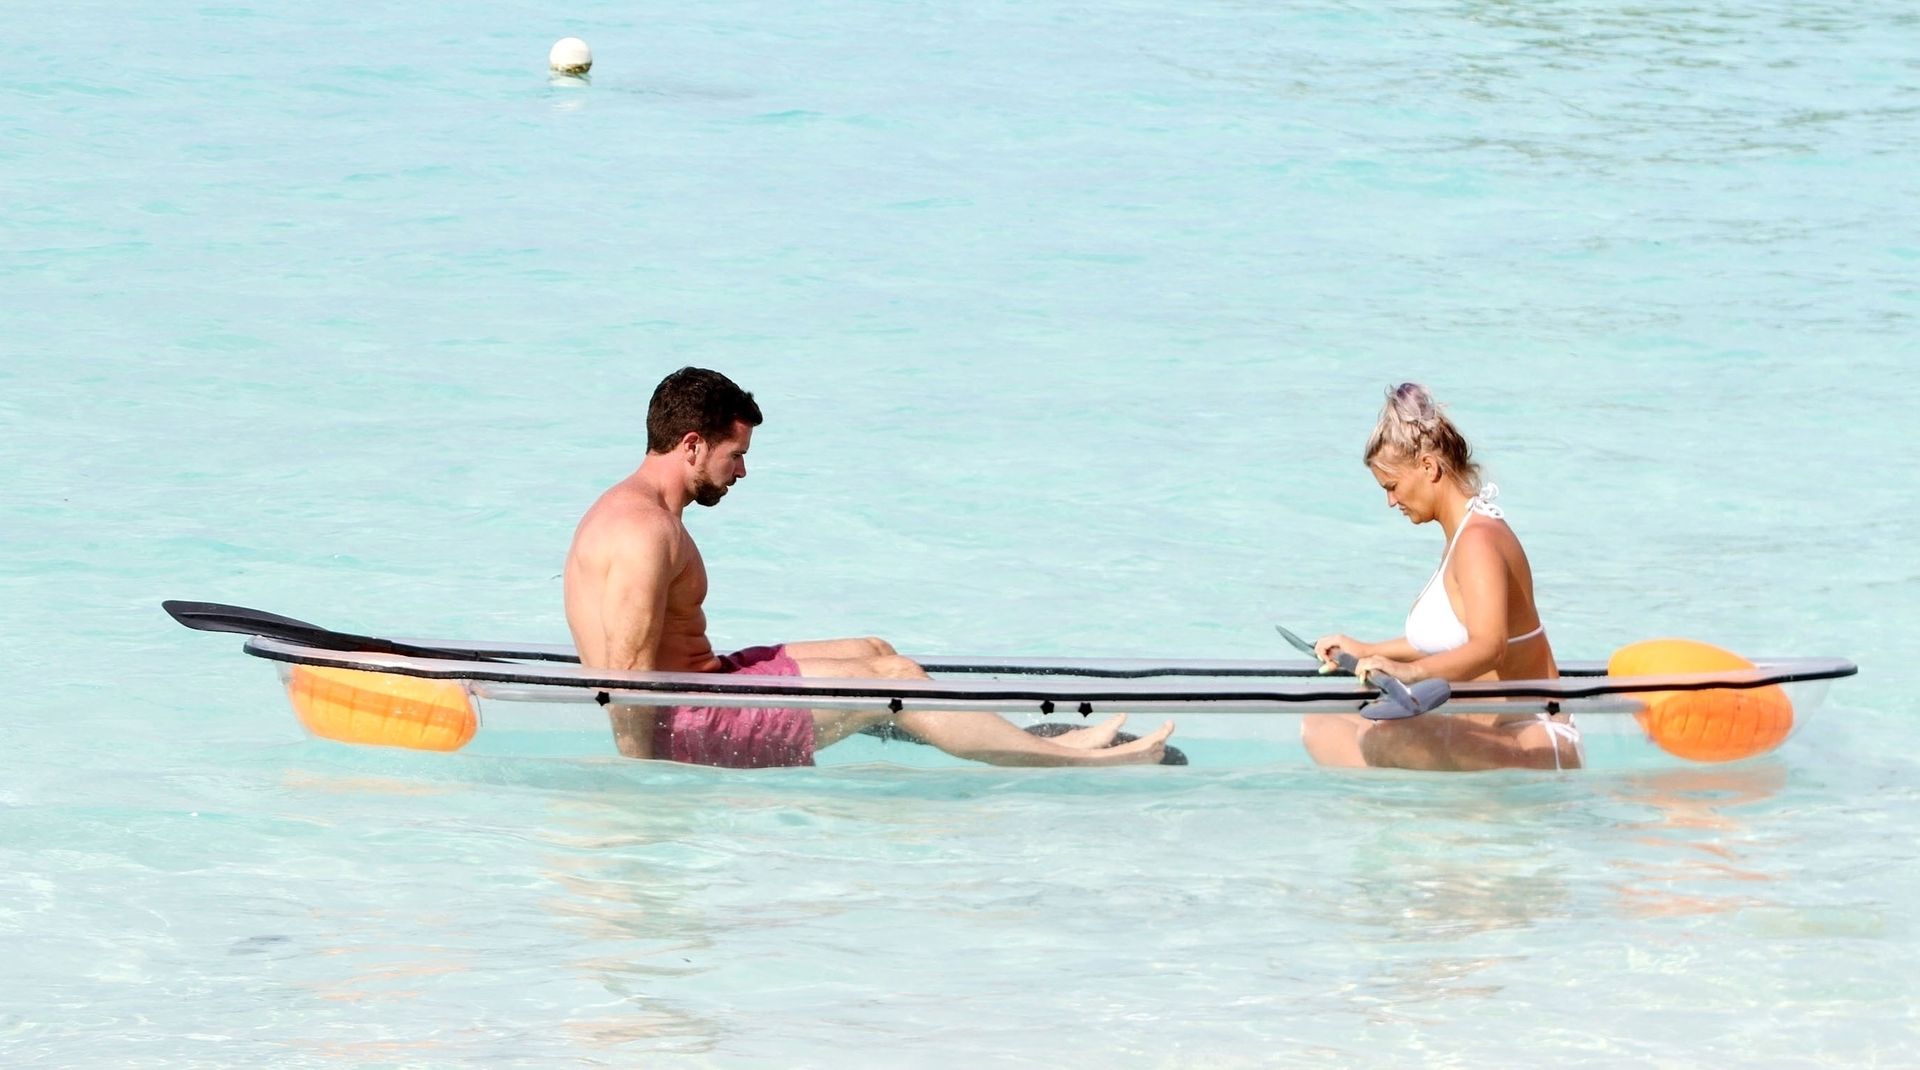 Kerry Katona & Ryan Mahoney Jump in a Canoe for Some Fun in the Indian Ocean (44 Photos)